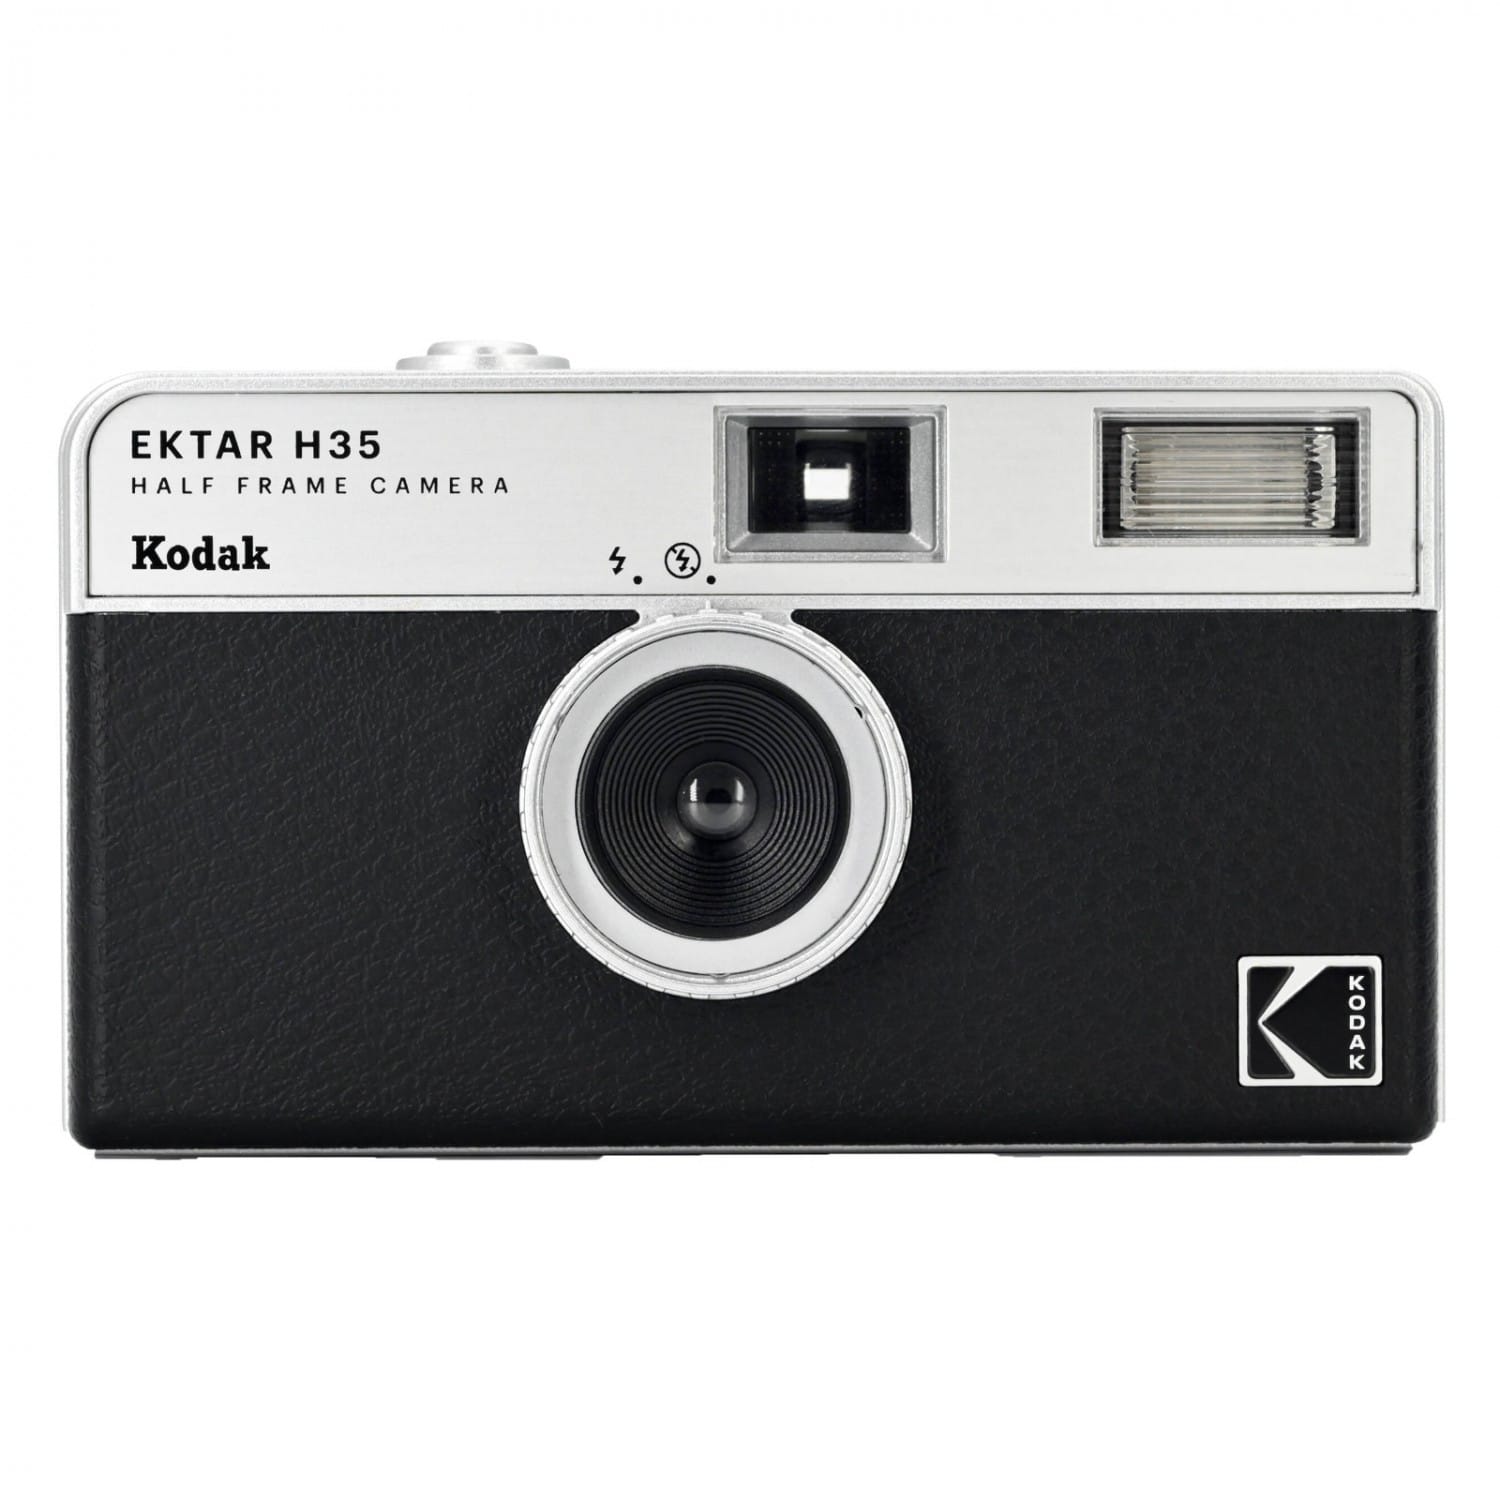 Pellicule Kodak UltraMax 400 35 mm, 36 expositions - 5 unités